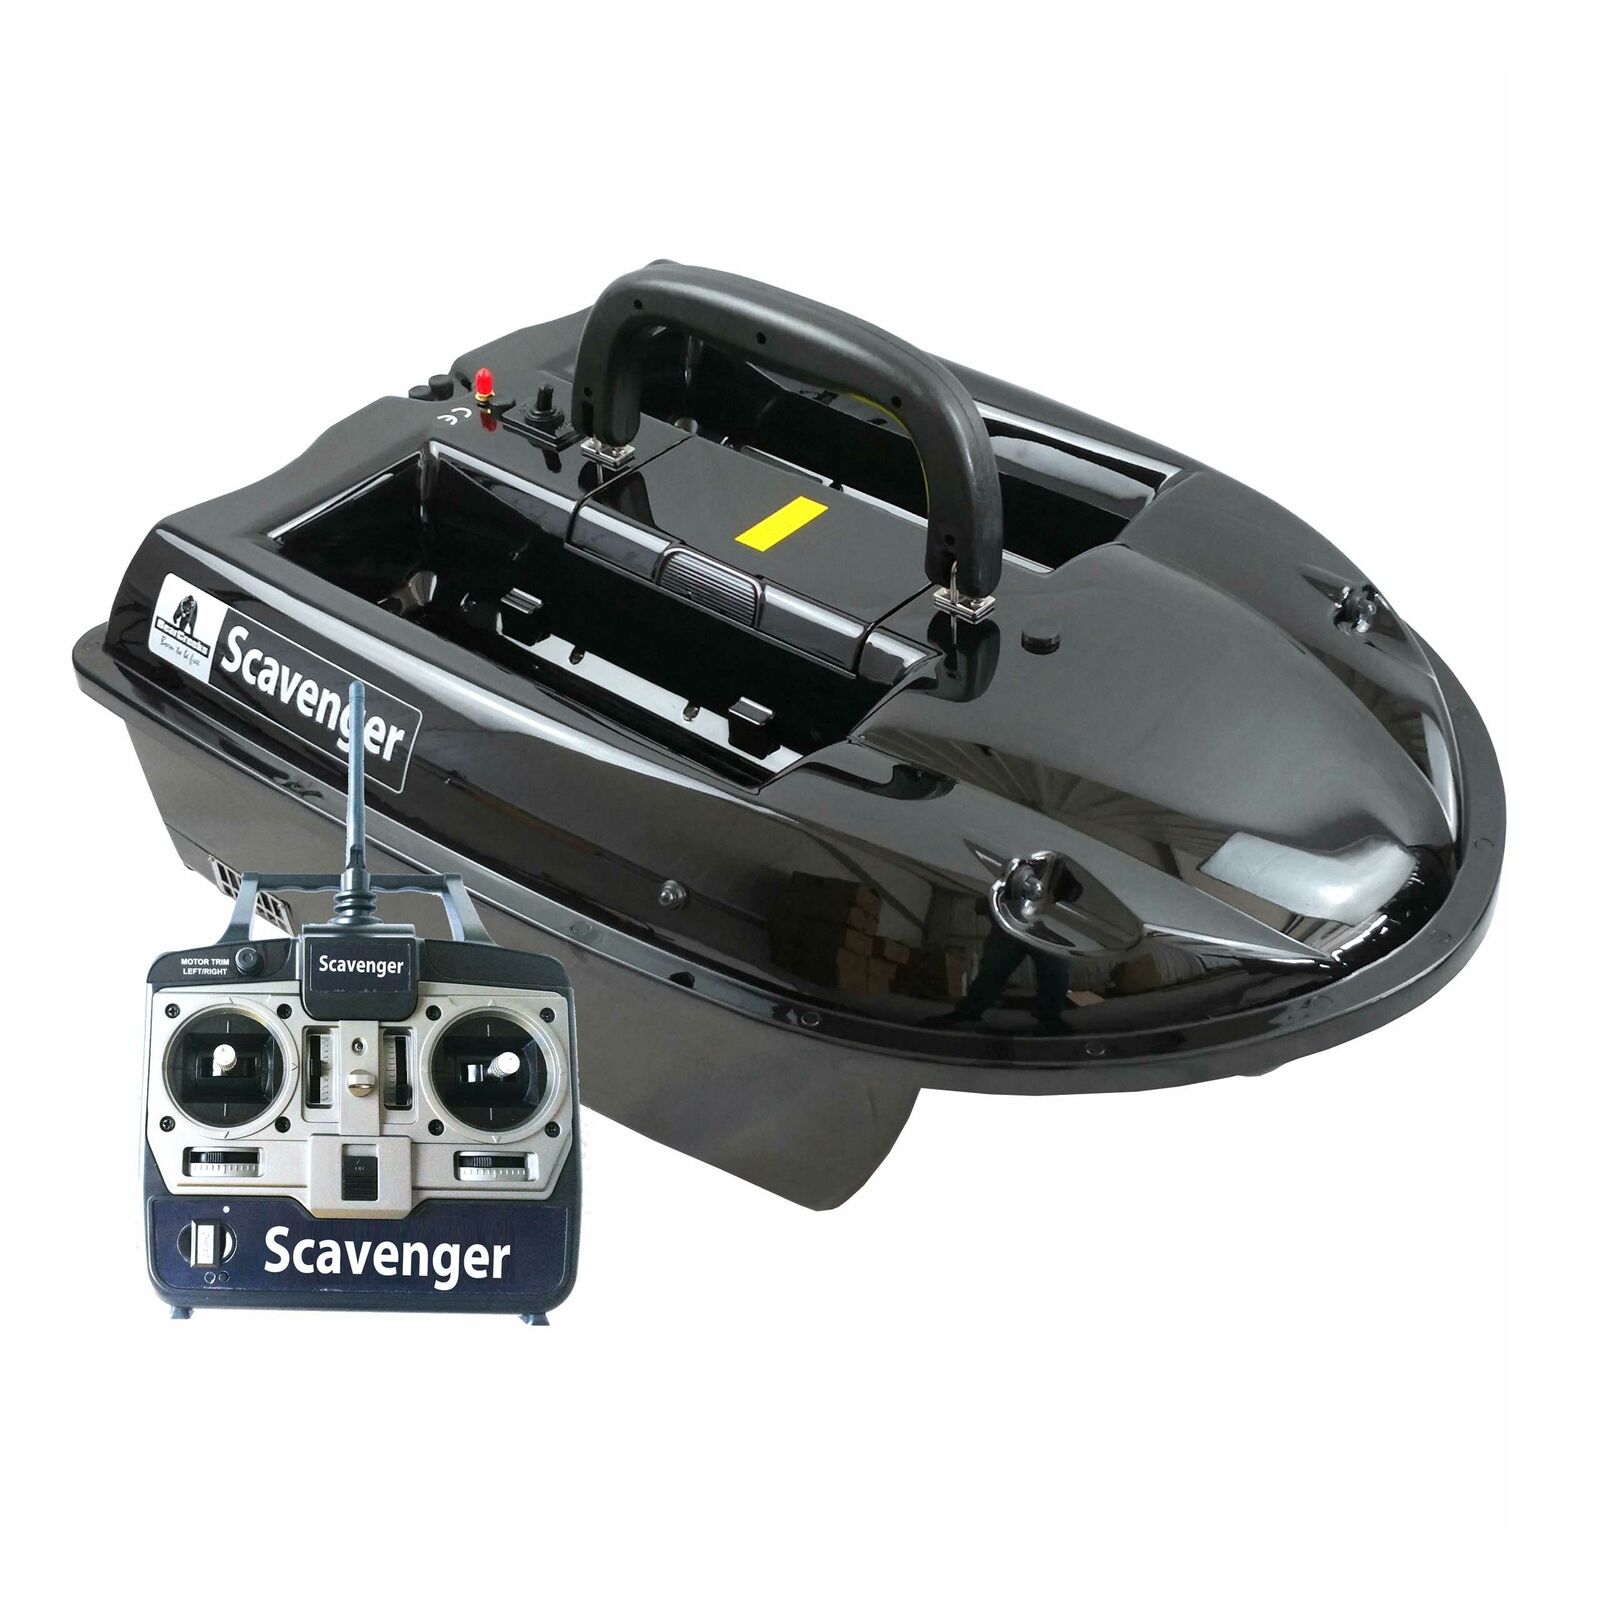 Scavenger Baitboat with Lead Acid Battery Version | 2.4GHz Radio System | Optional Fishfinders